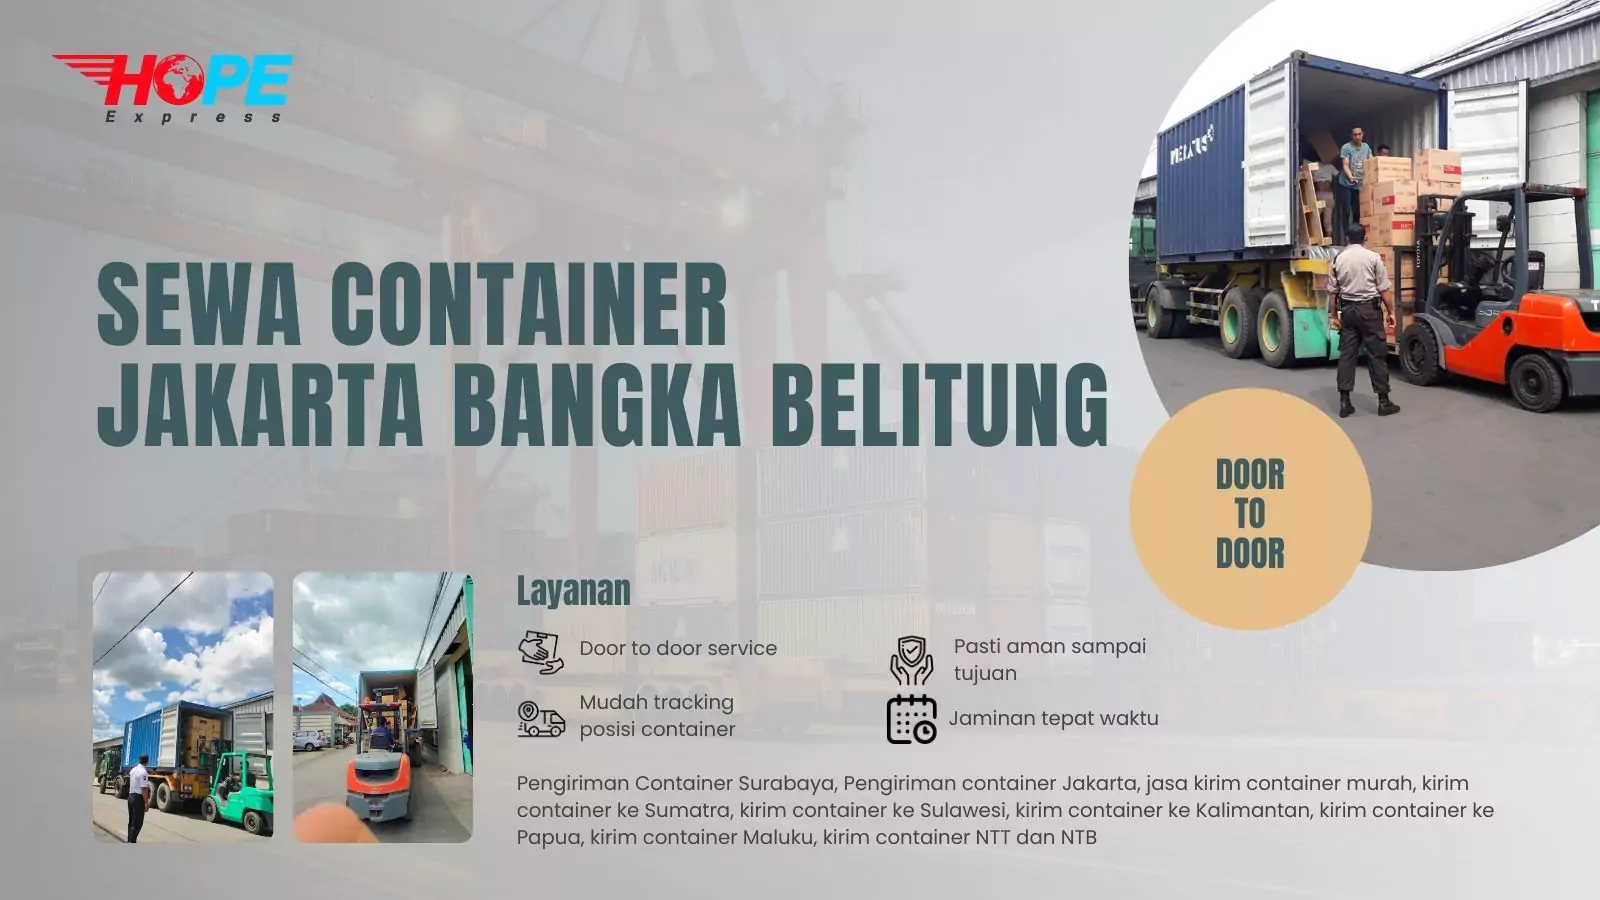 Sewa Container Jakarta Bangka Belitung